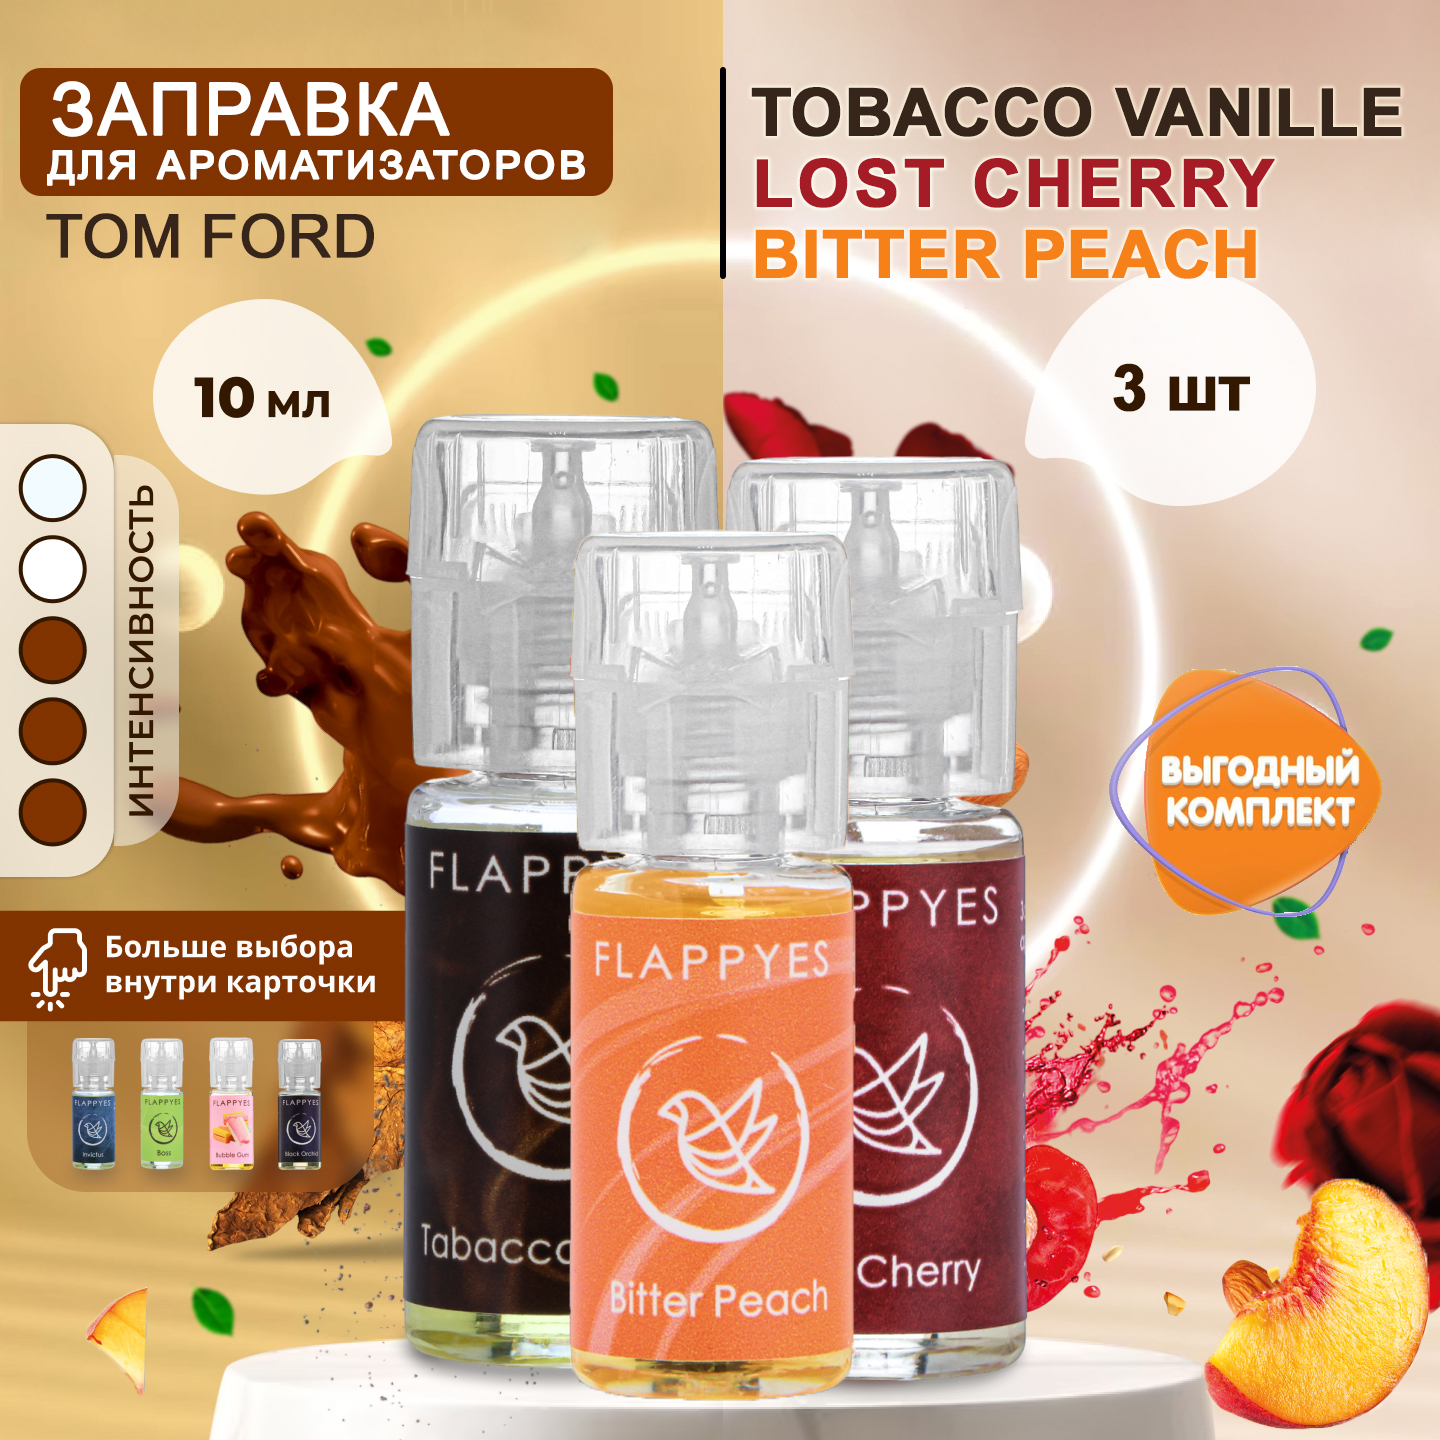 Заправка для ароматизаторов Flappyes - Tobacco Vanille + Lost Cherry + Bitter peach